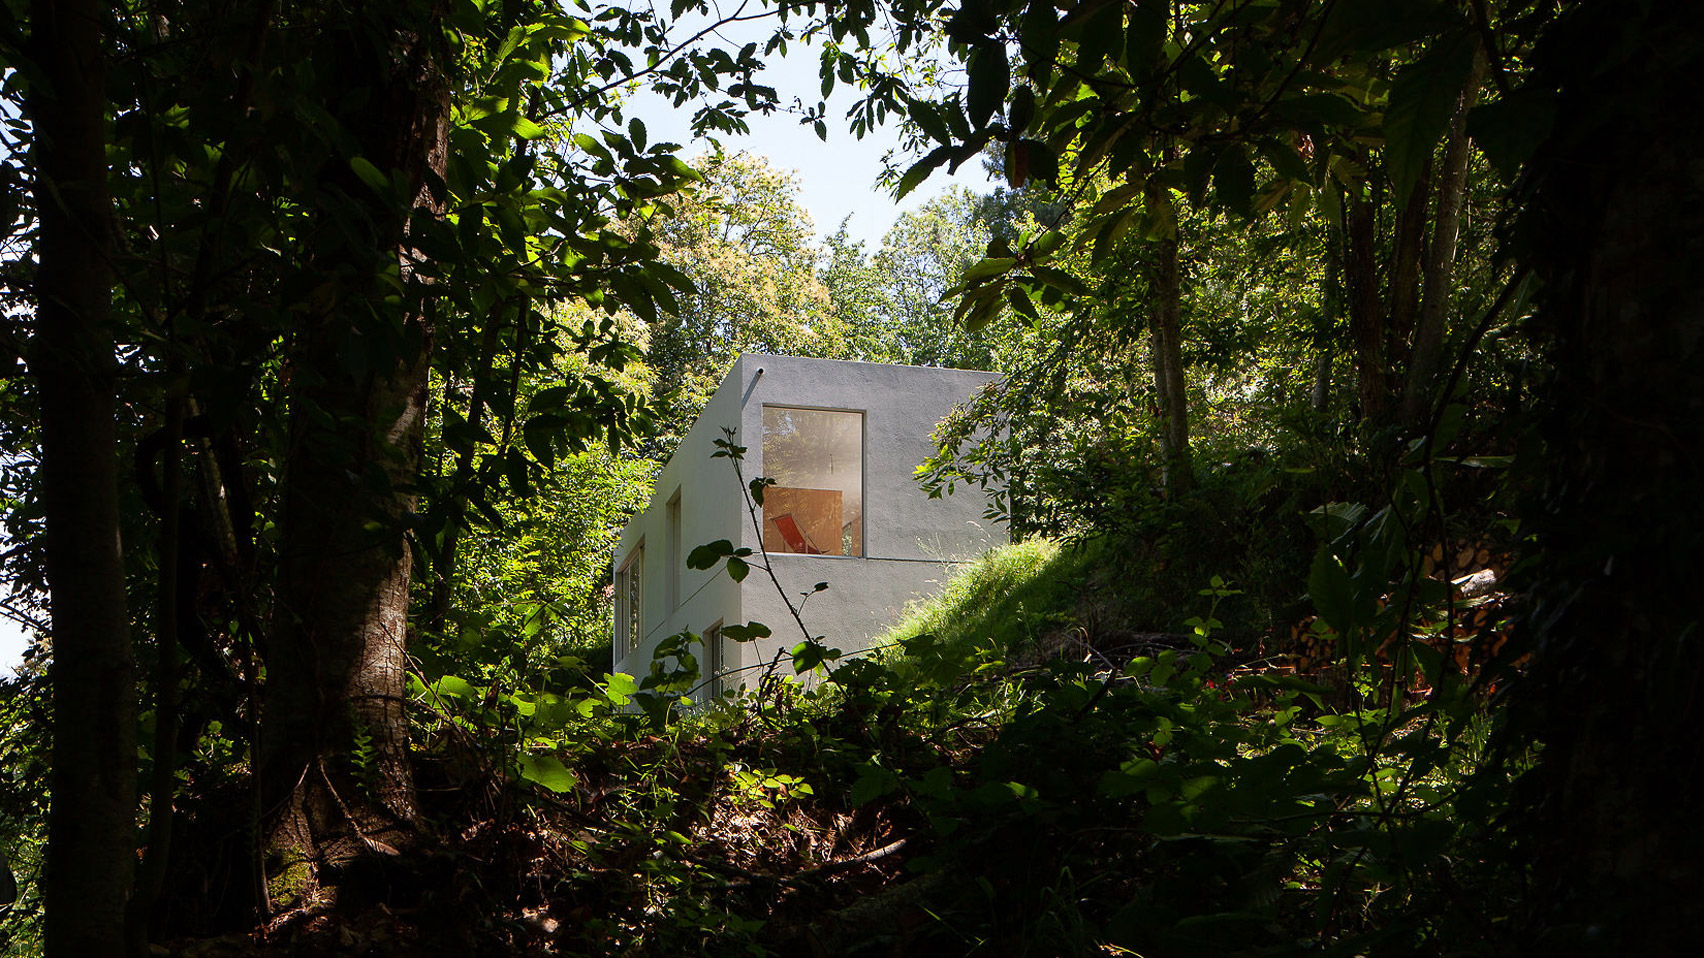 Pablo Pita's geometric Forja House nestles amongst trees in Portuguese valley